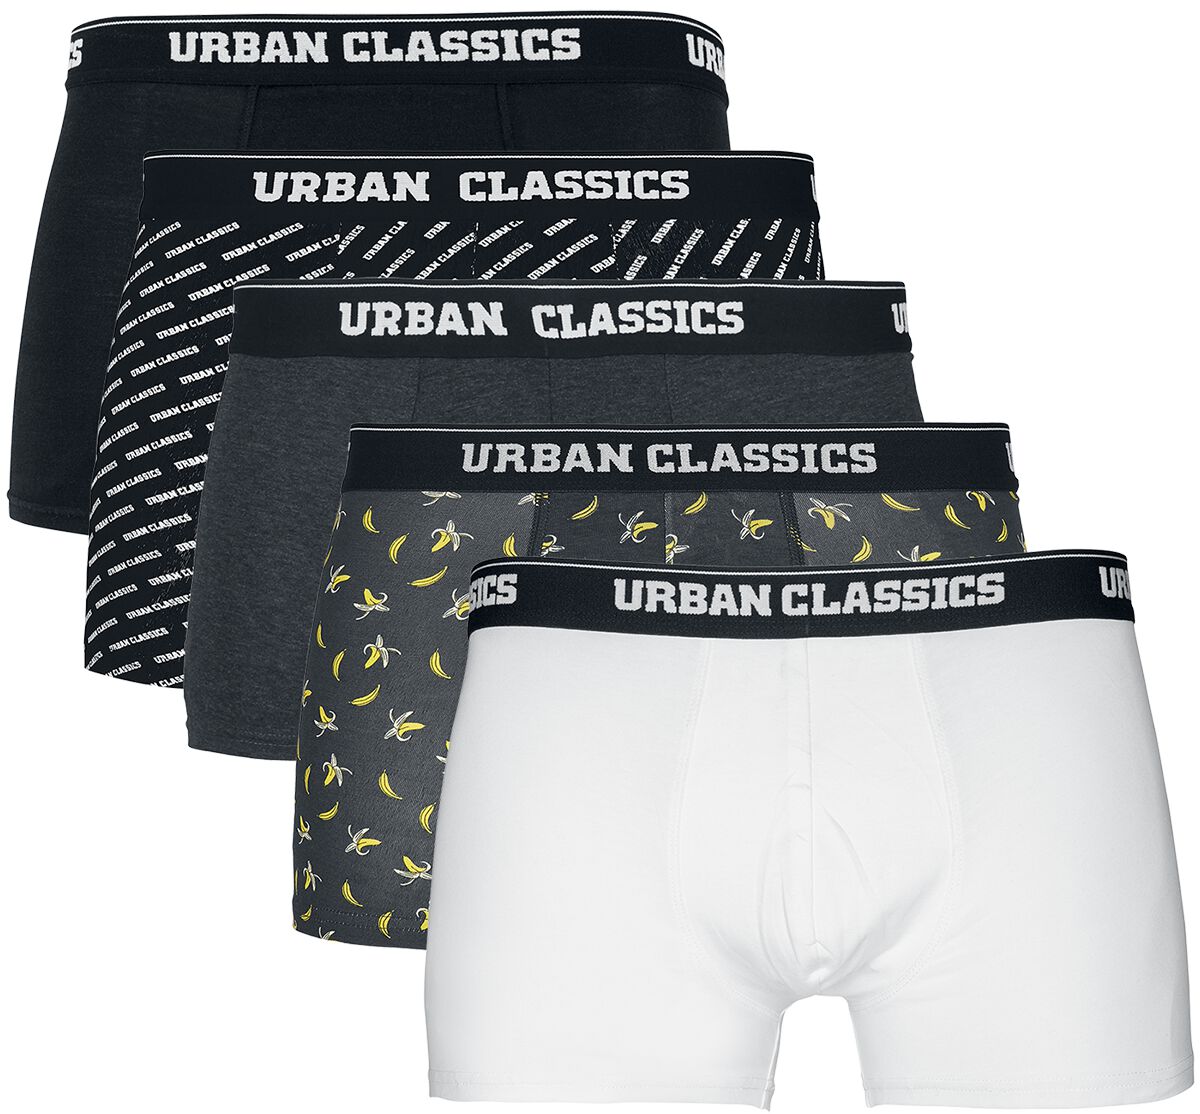 Urban Classics Boxer Shorts 5-Pack Boxershort-Set schwarz grau weiß in L